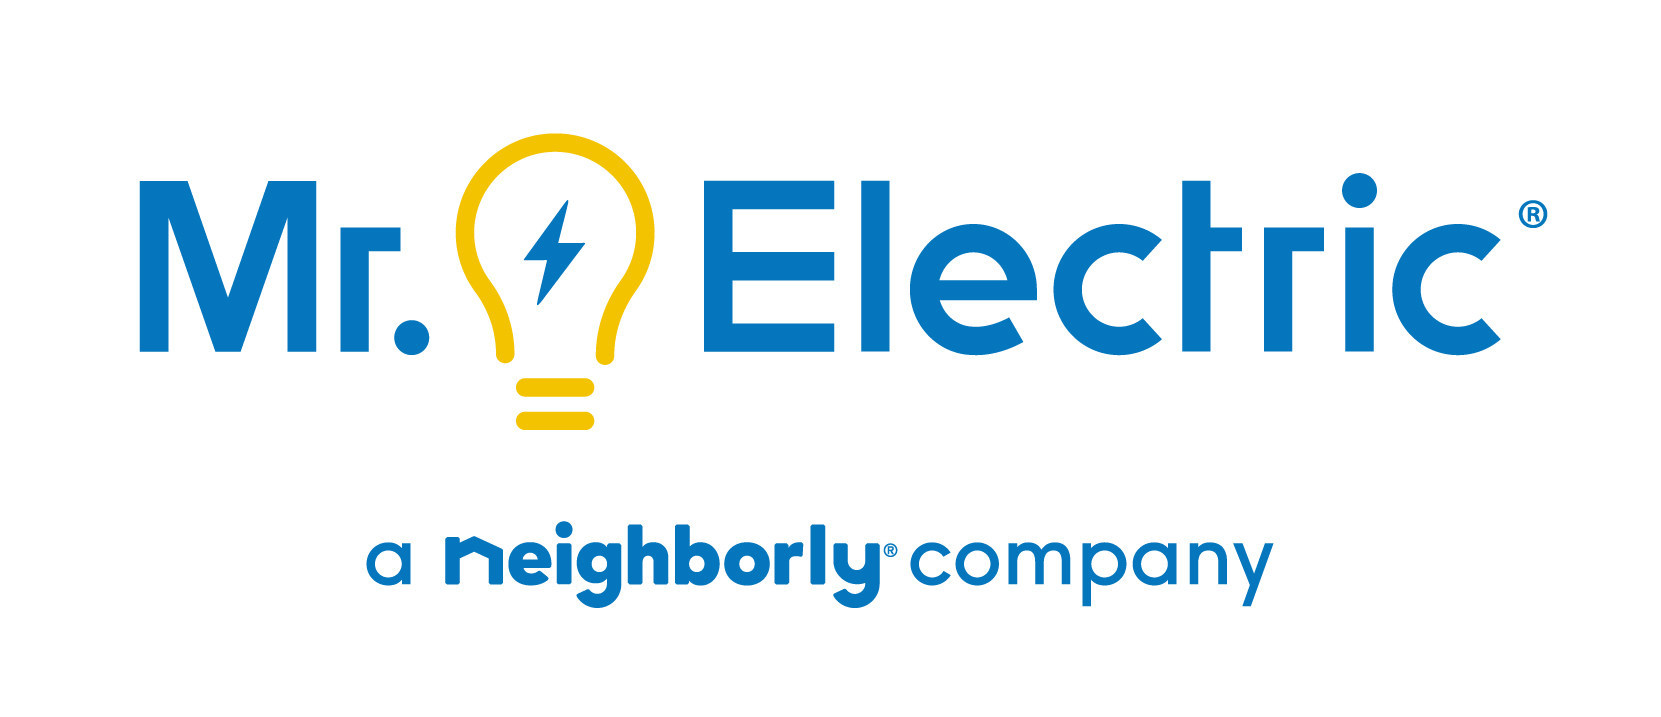 Mr. Electric, a Neighborly company